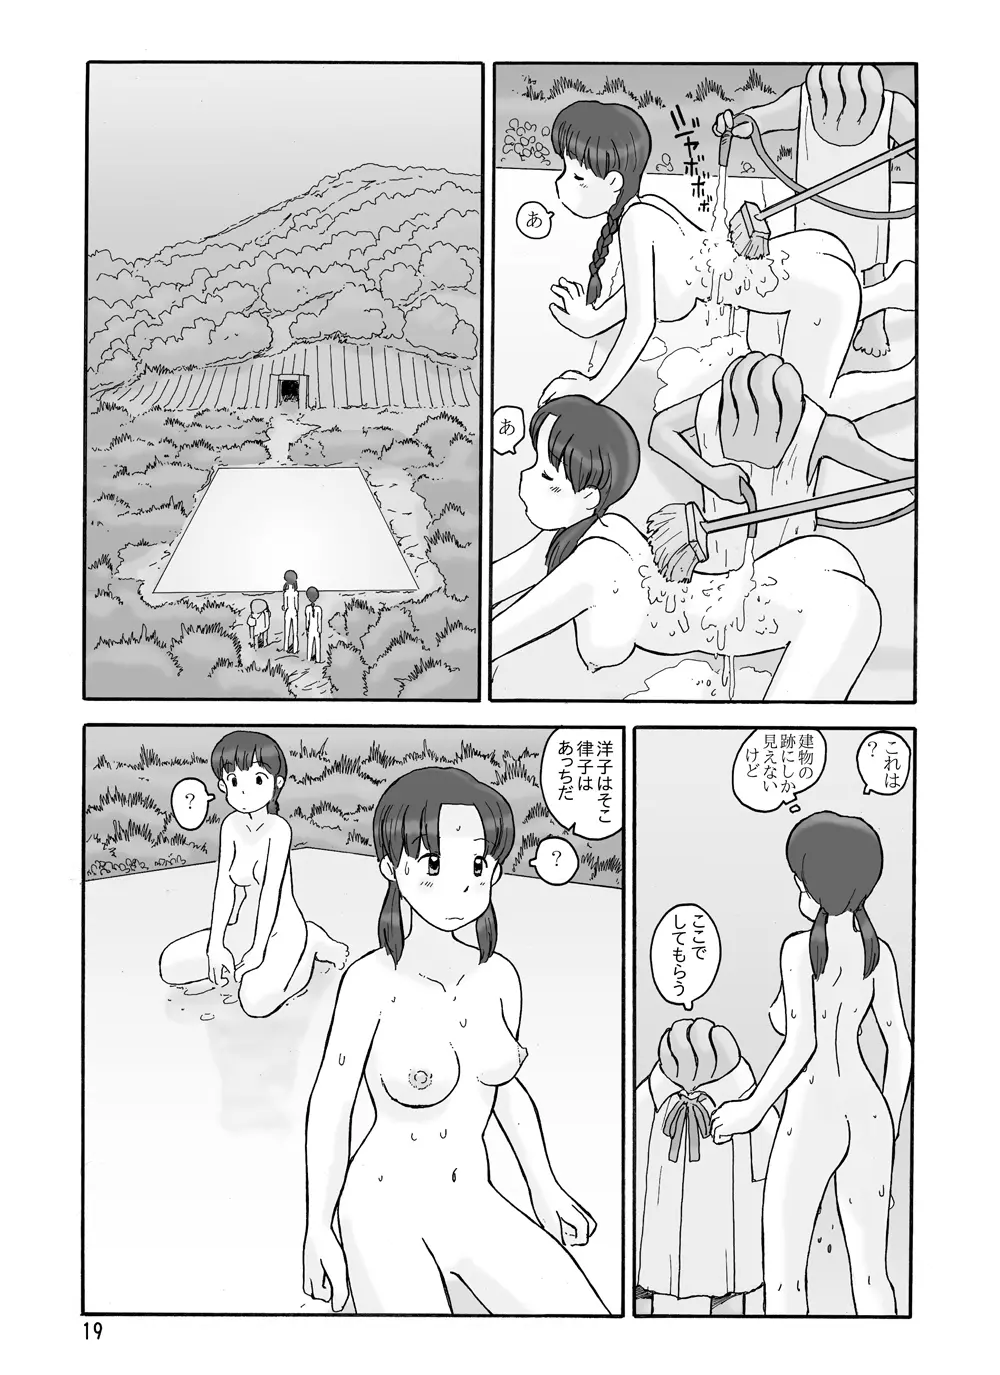 瓜頭 - page18